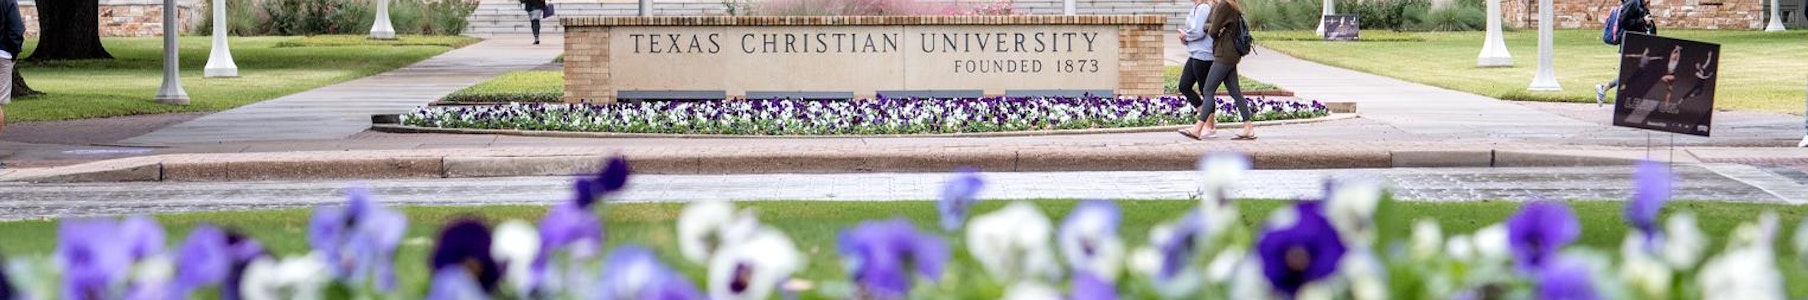 texas christian university essay prompts